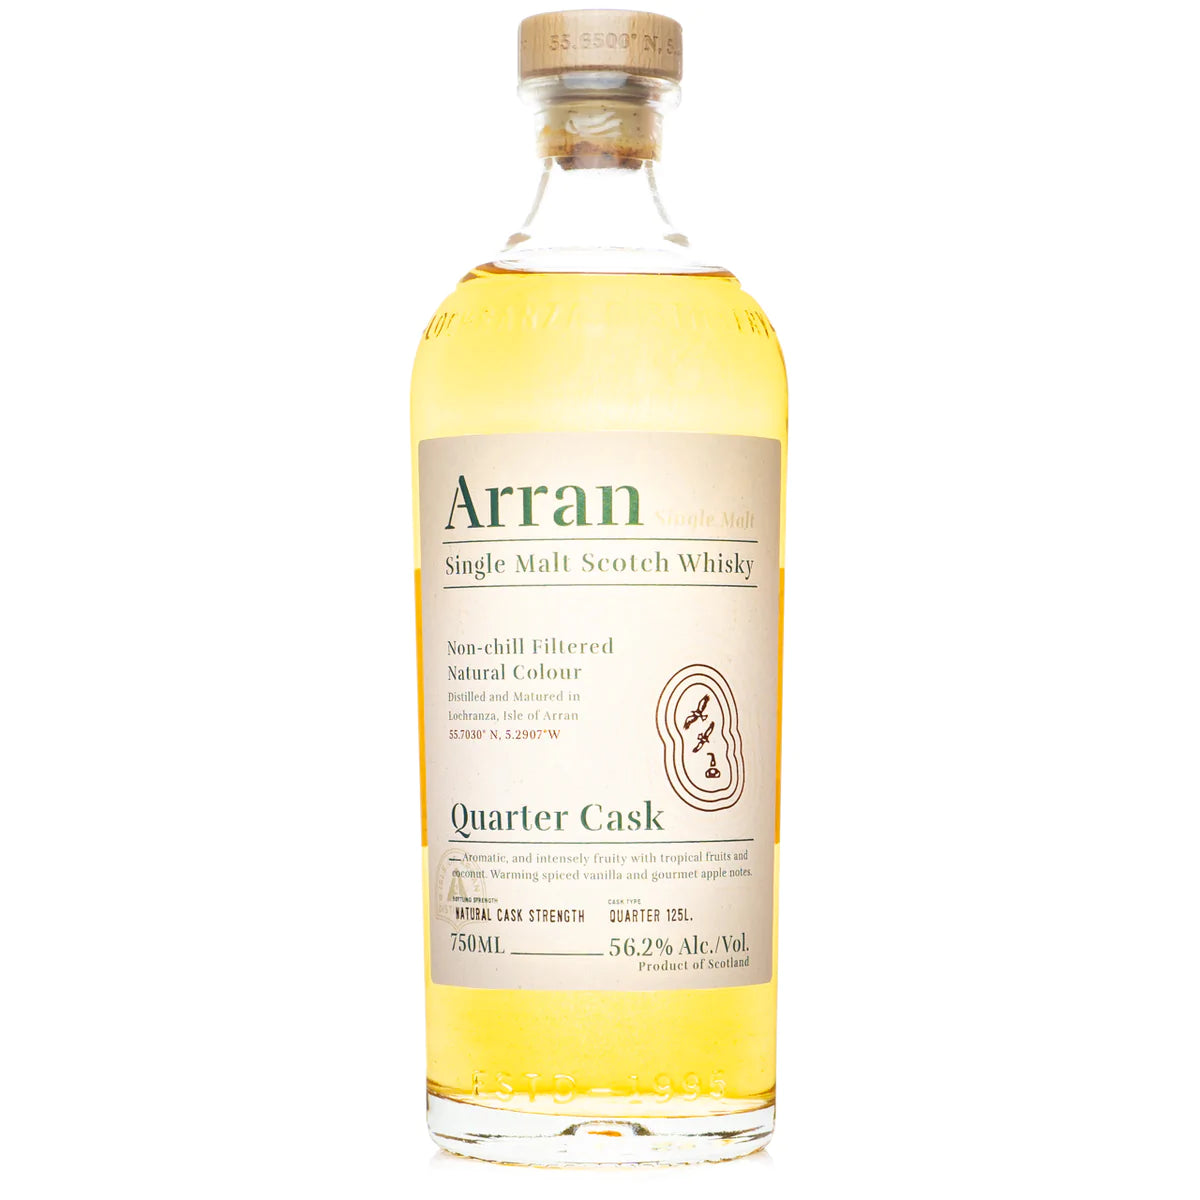 Arran Quarter Cask 'The Bothy' Single Malt Scotch Whisky